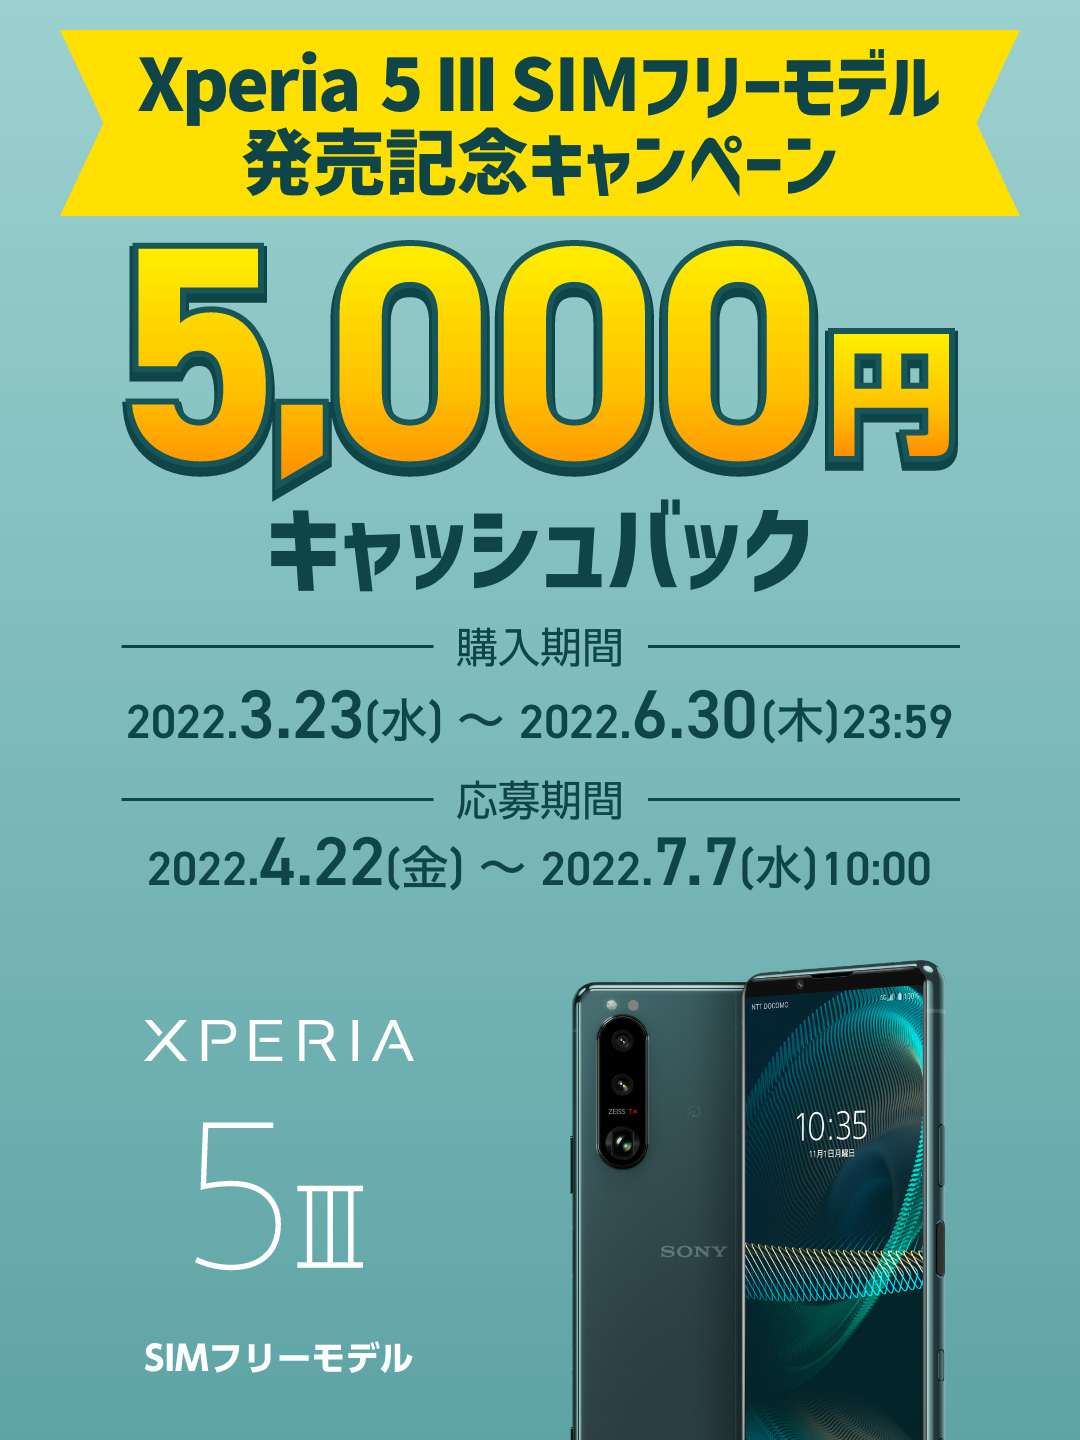 Xperia 5 III SIMフリーモデル発売記念キャンペーン | Xperia 